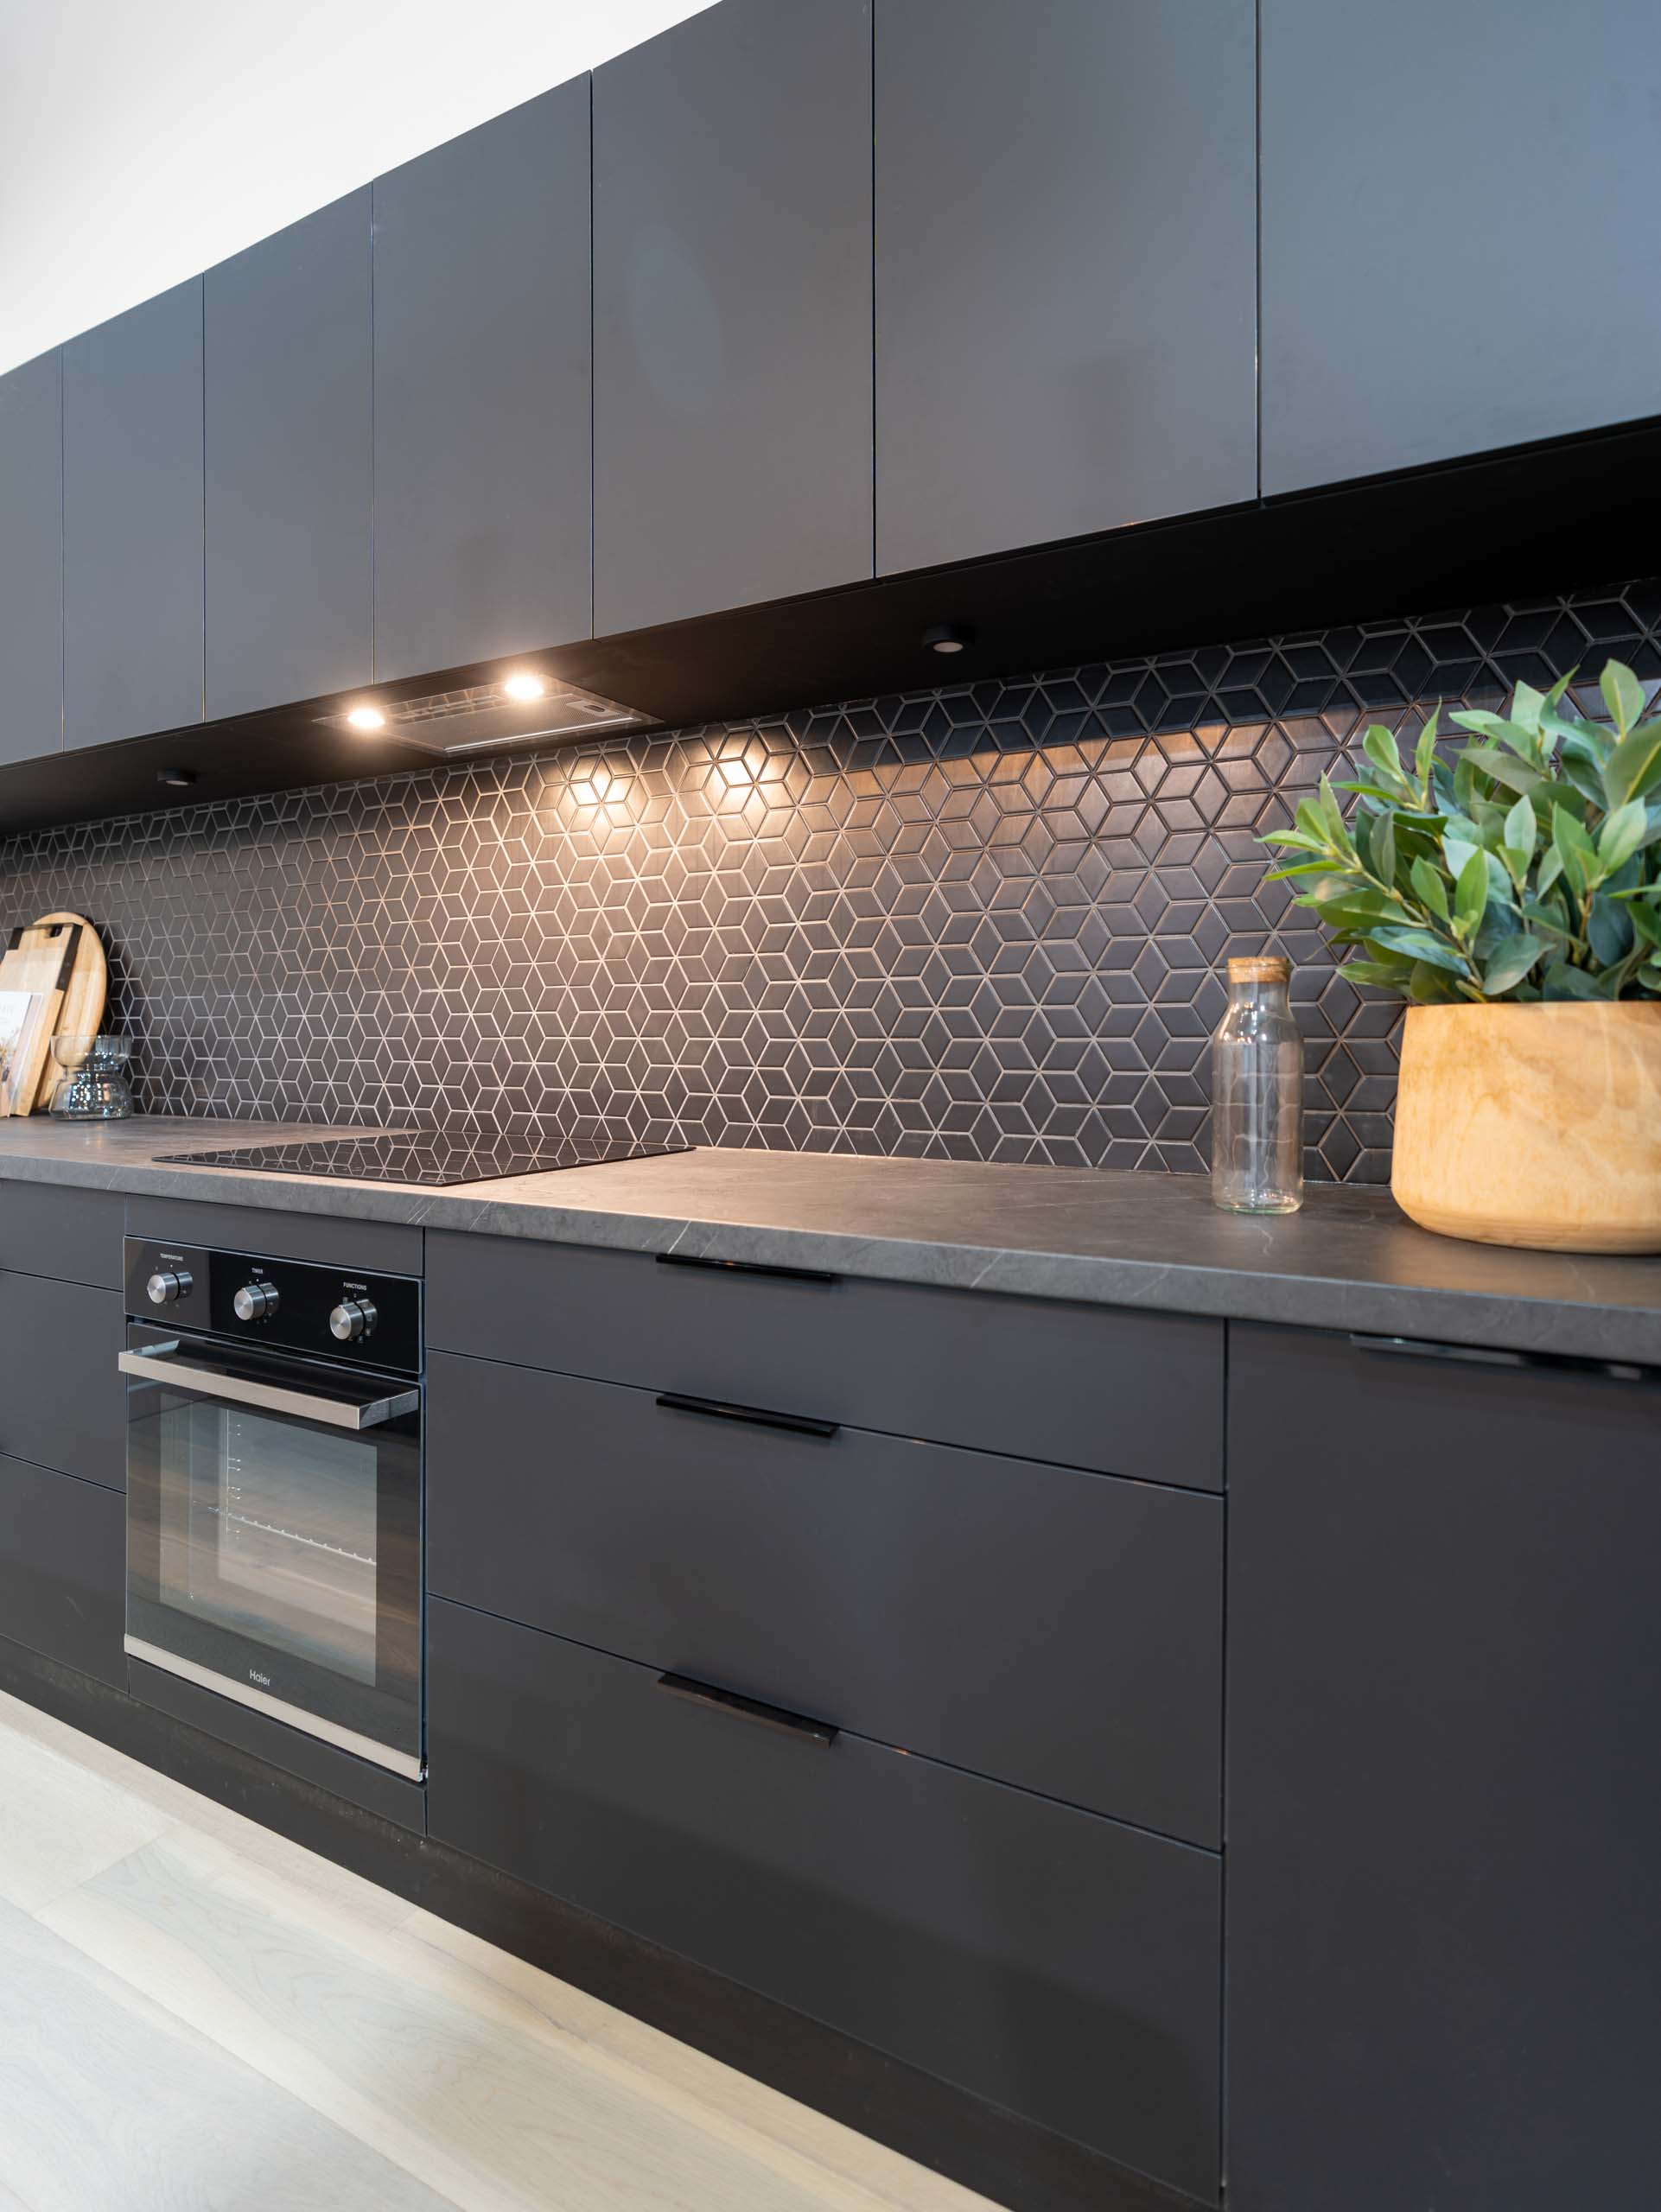 Image of black supermatte kitchen display with black kitchen appliances.